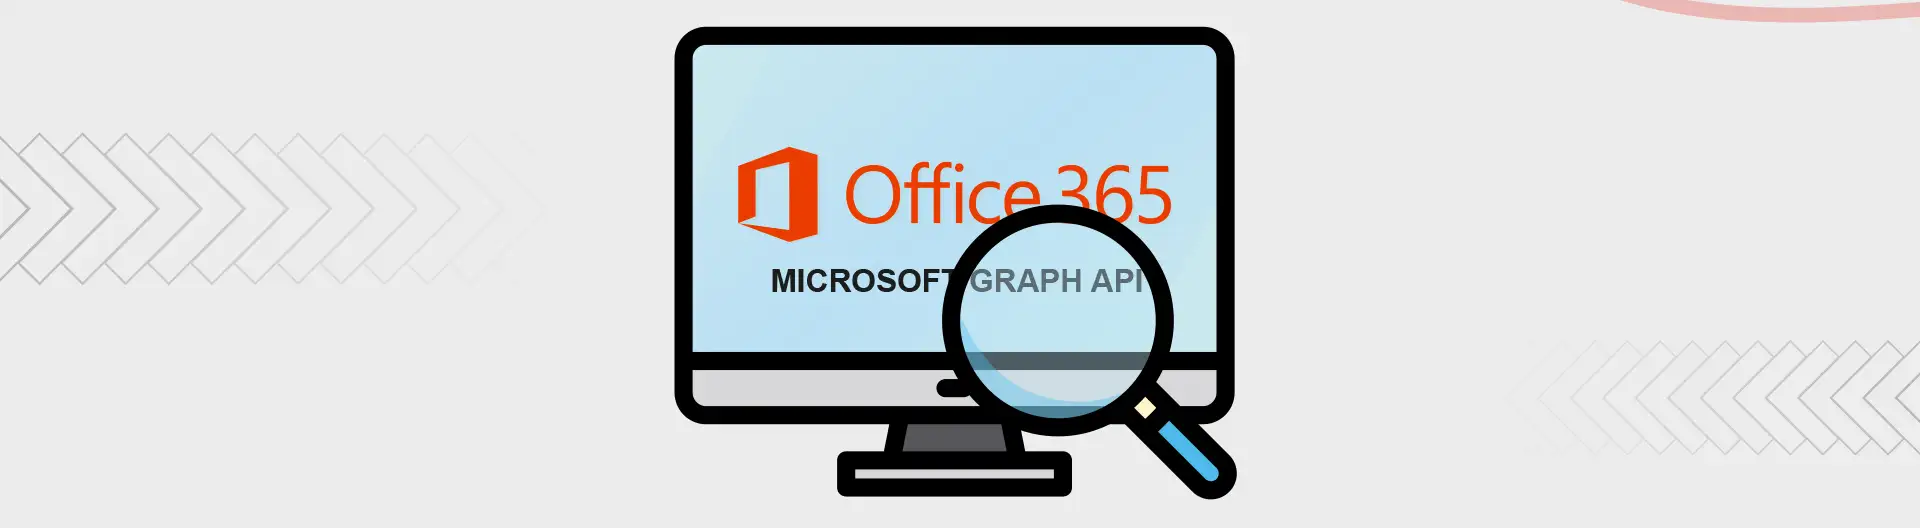 Using Microsoft Graph API inside Microsoft Flow in Office 365 - Banner